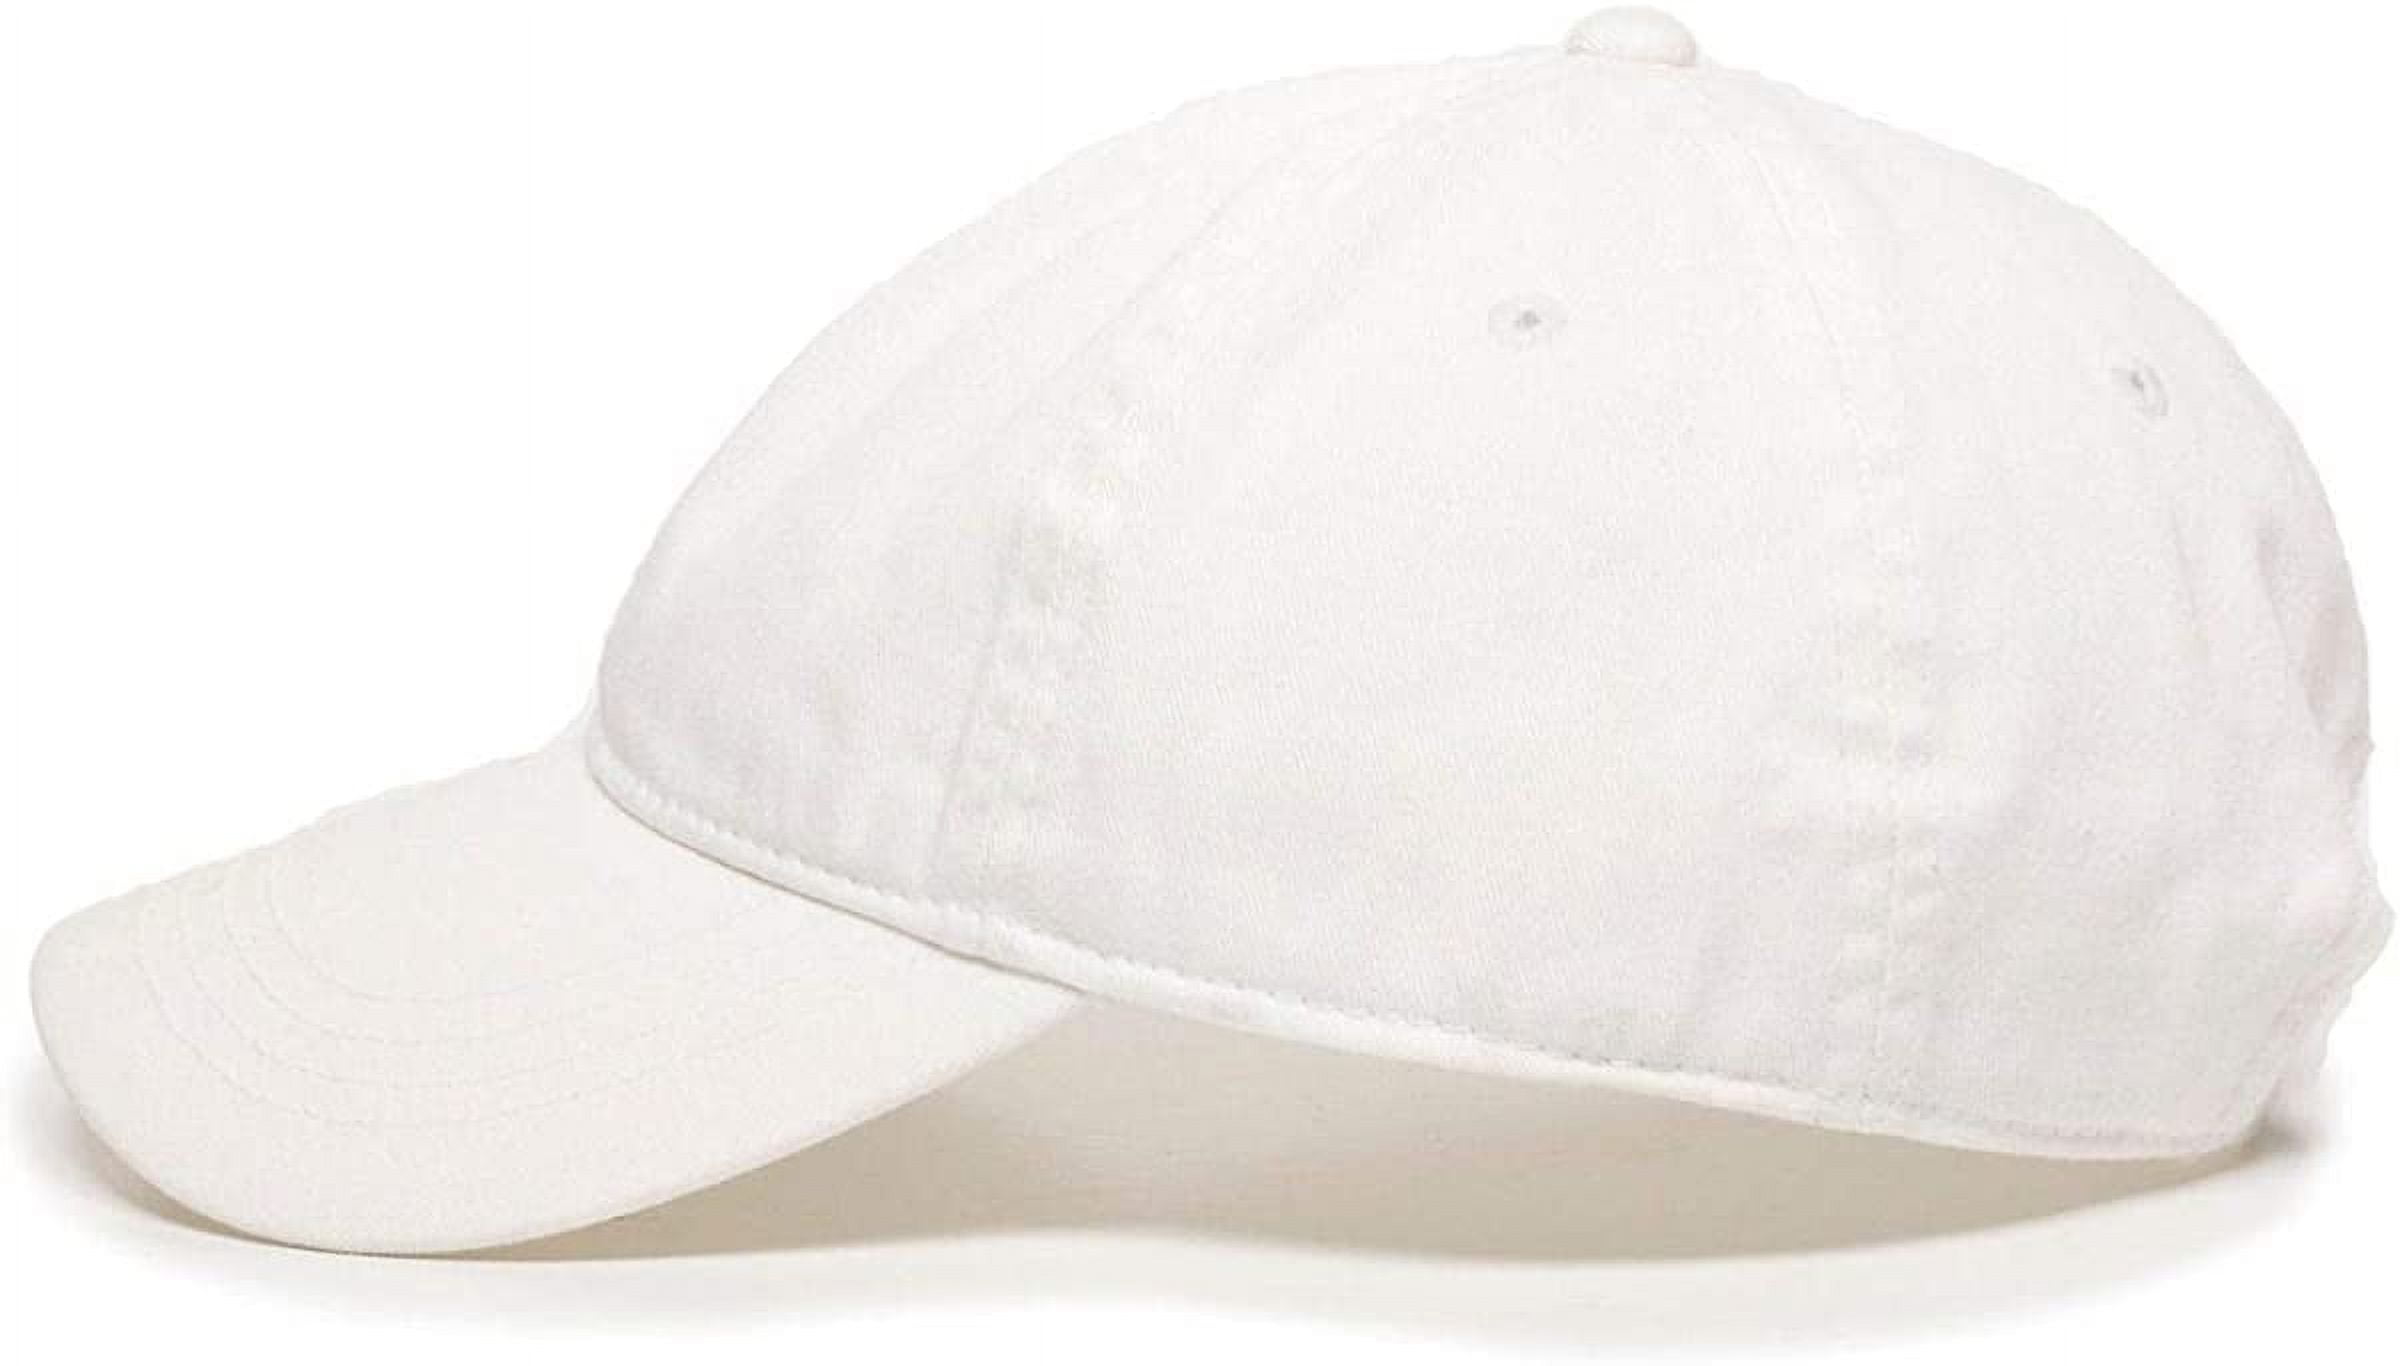 Men's Solid Cotton Mushroom Baseball Hat - Taupe